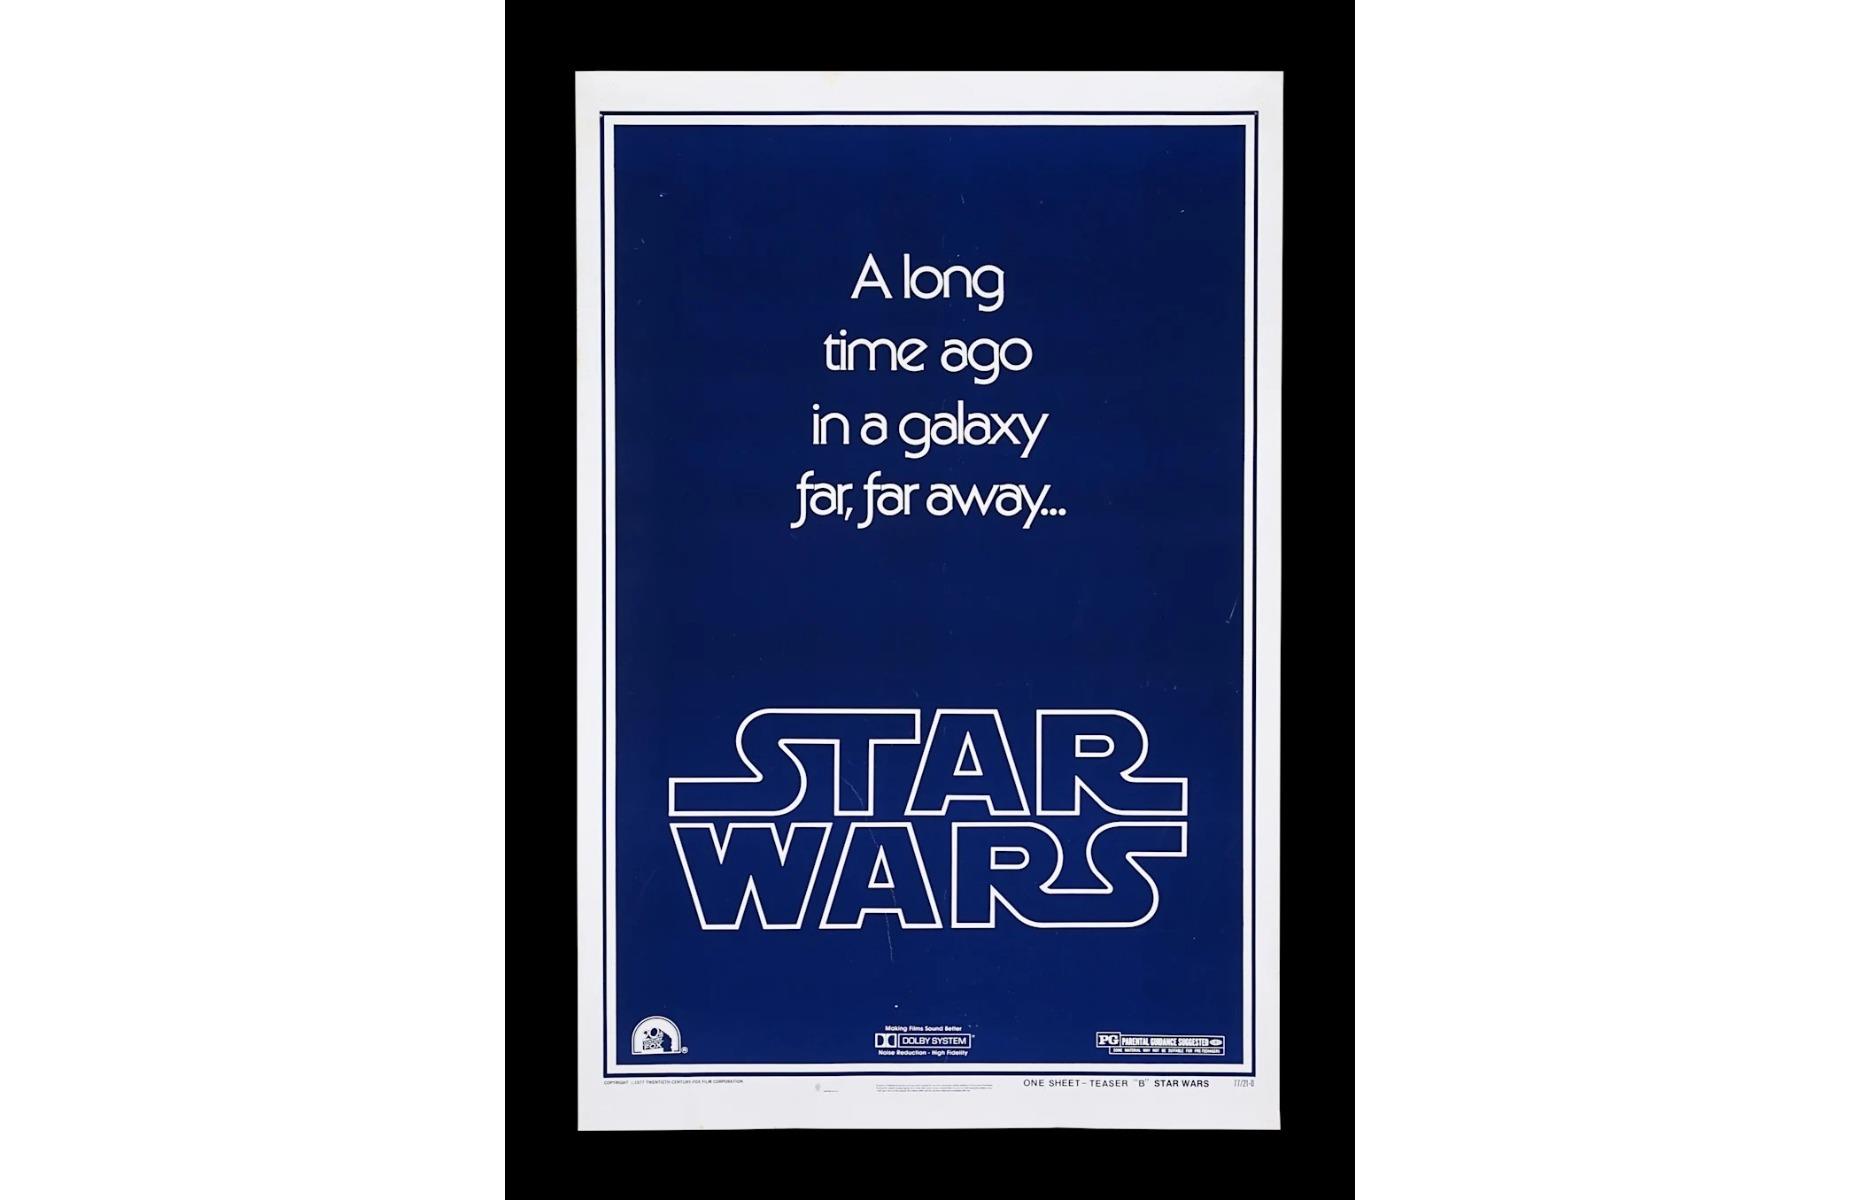 Star Wars (American Poster, 1977): $4,426 (£3,250)